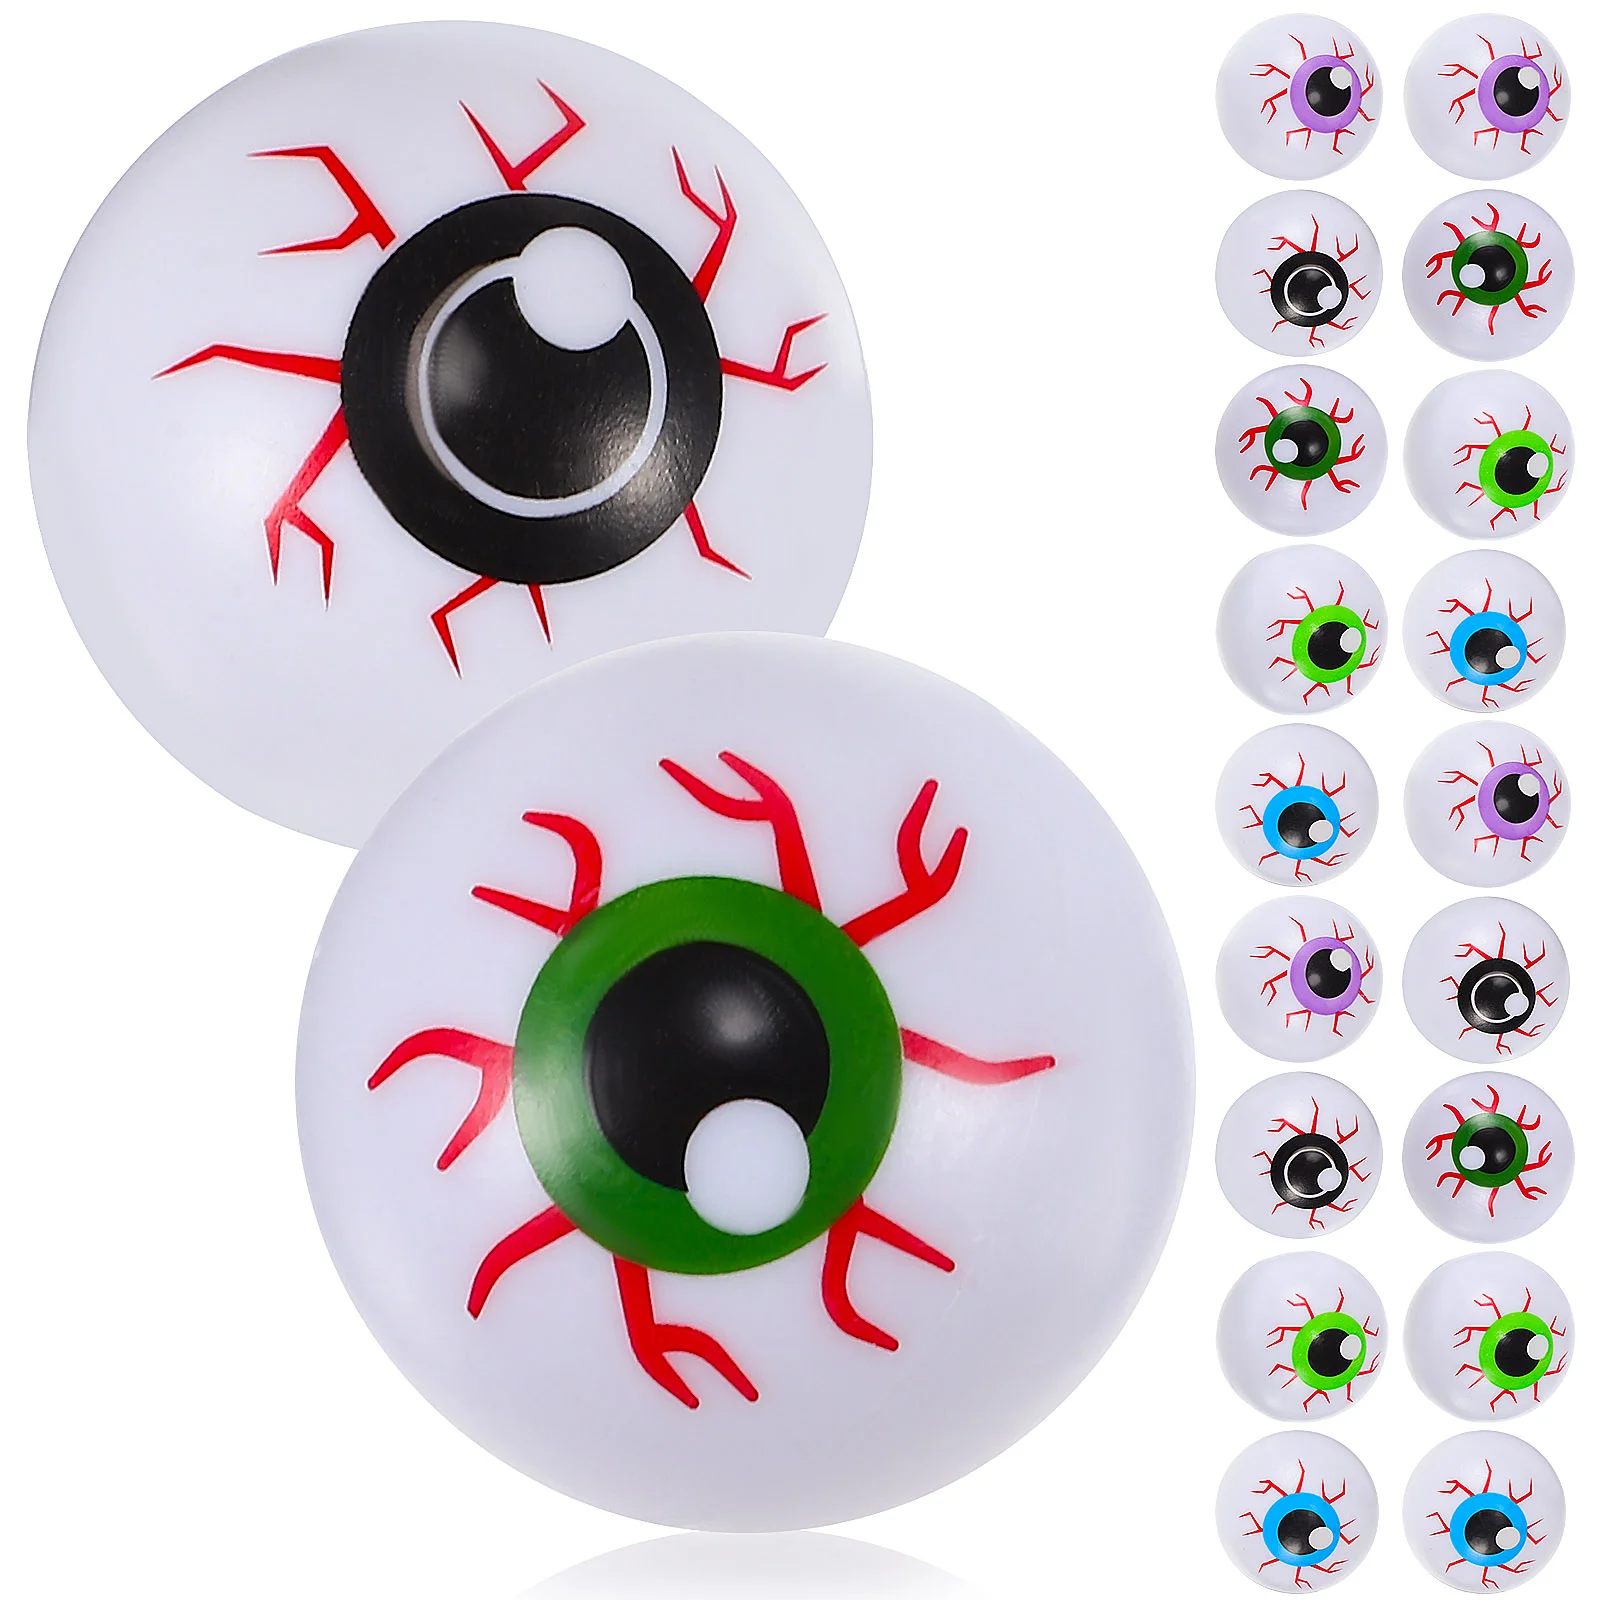 

20 Pcs Toy Halloween Party Favor Eyeball Plastic Eyeballs Decor For Crafts Pp Plaything Fake Decor Decoration Supplies